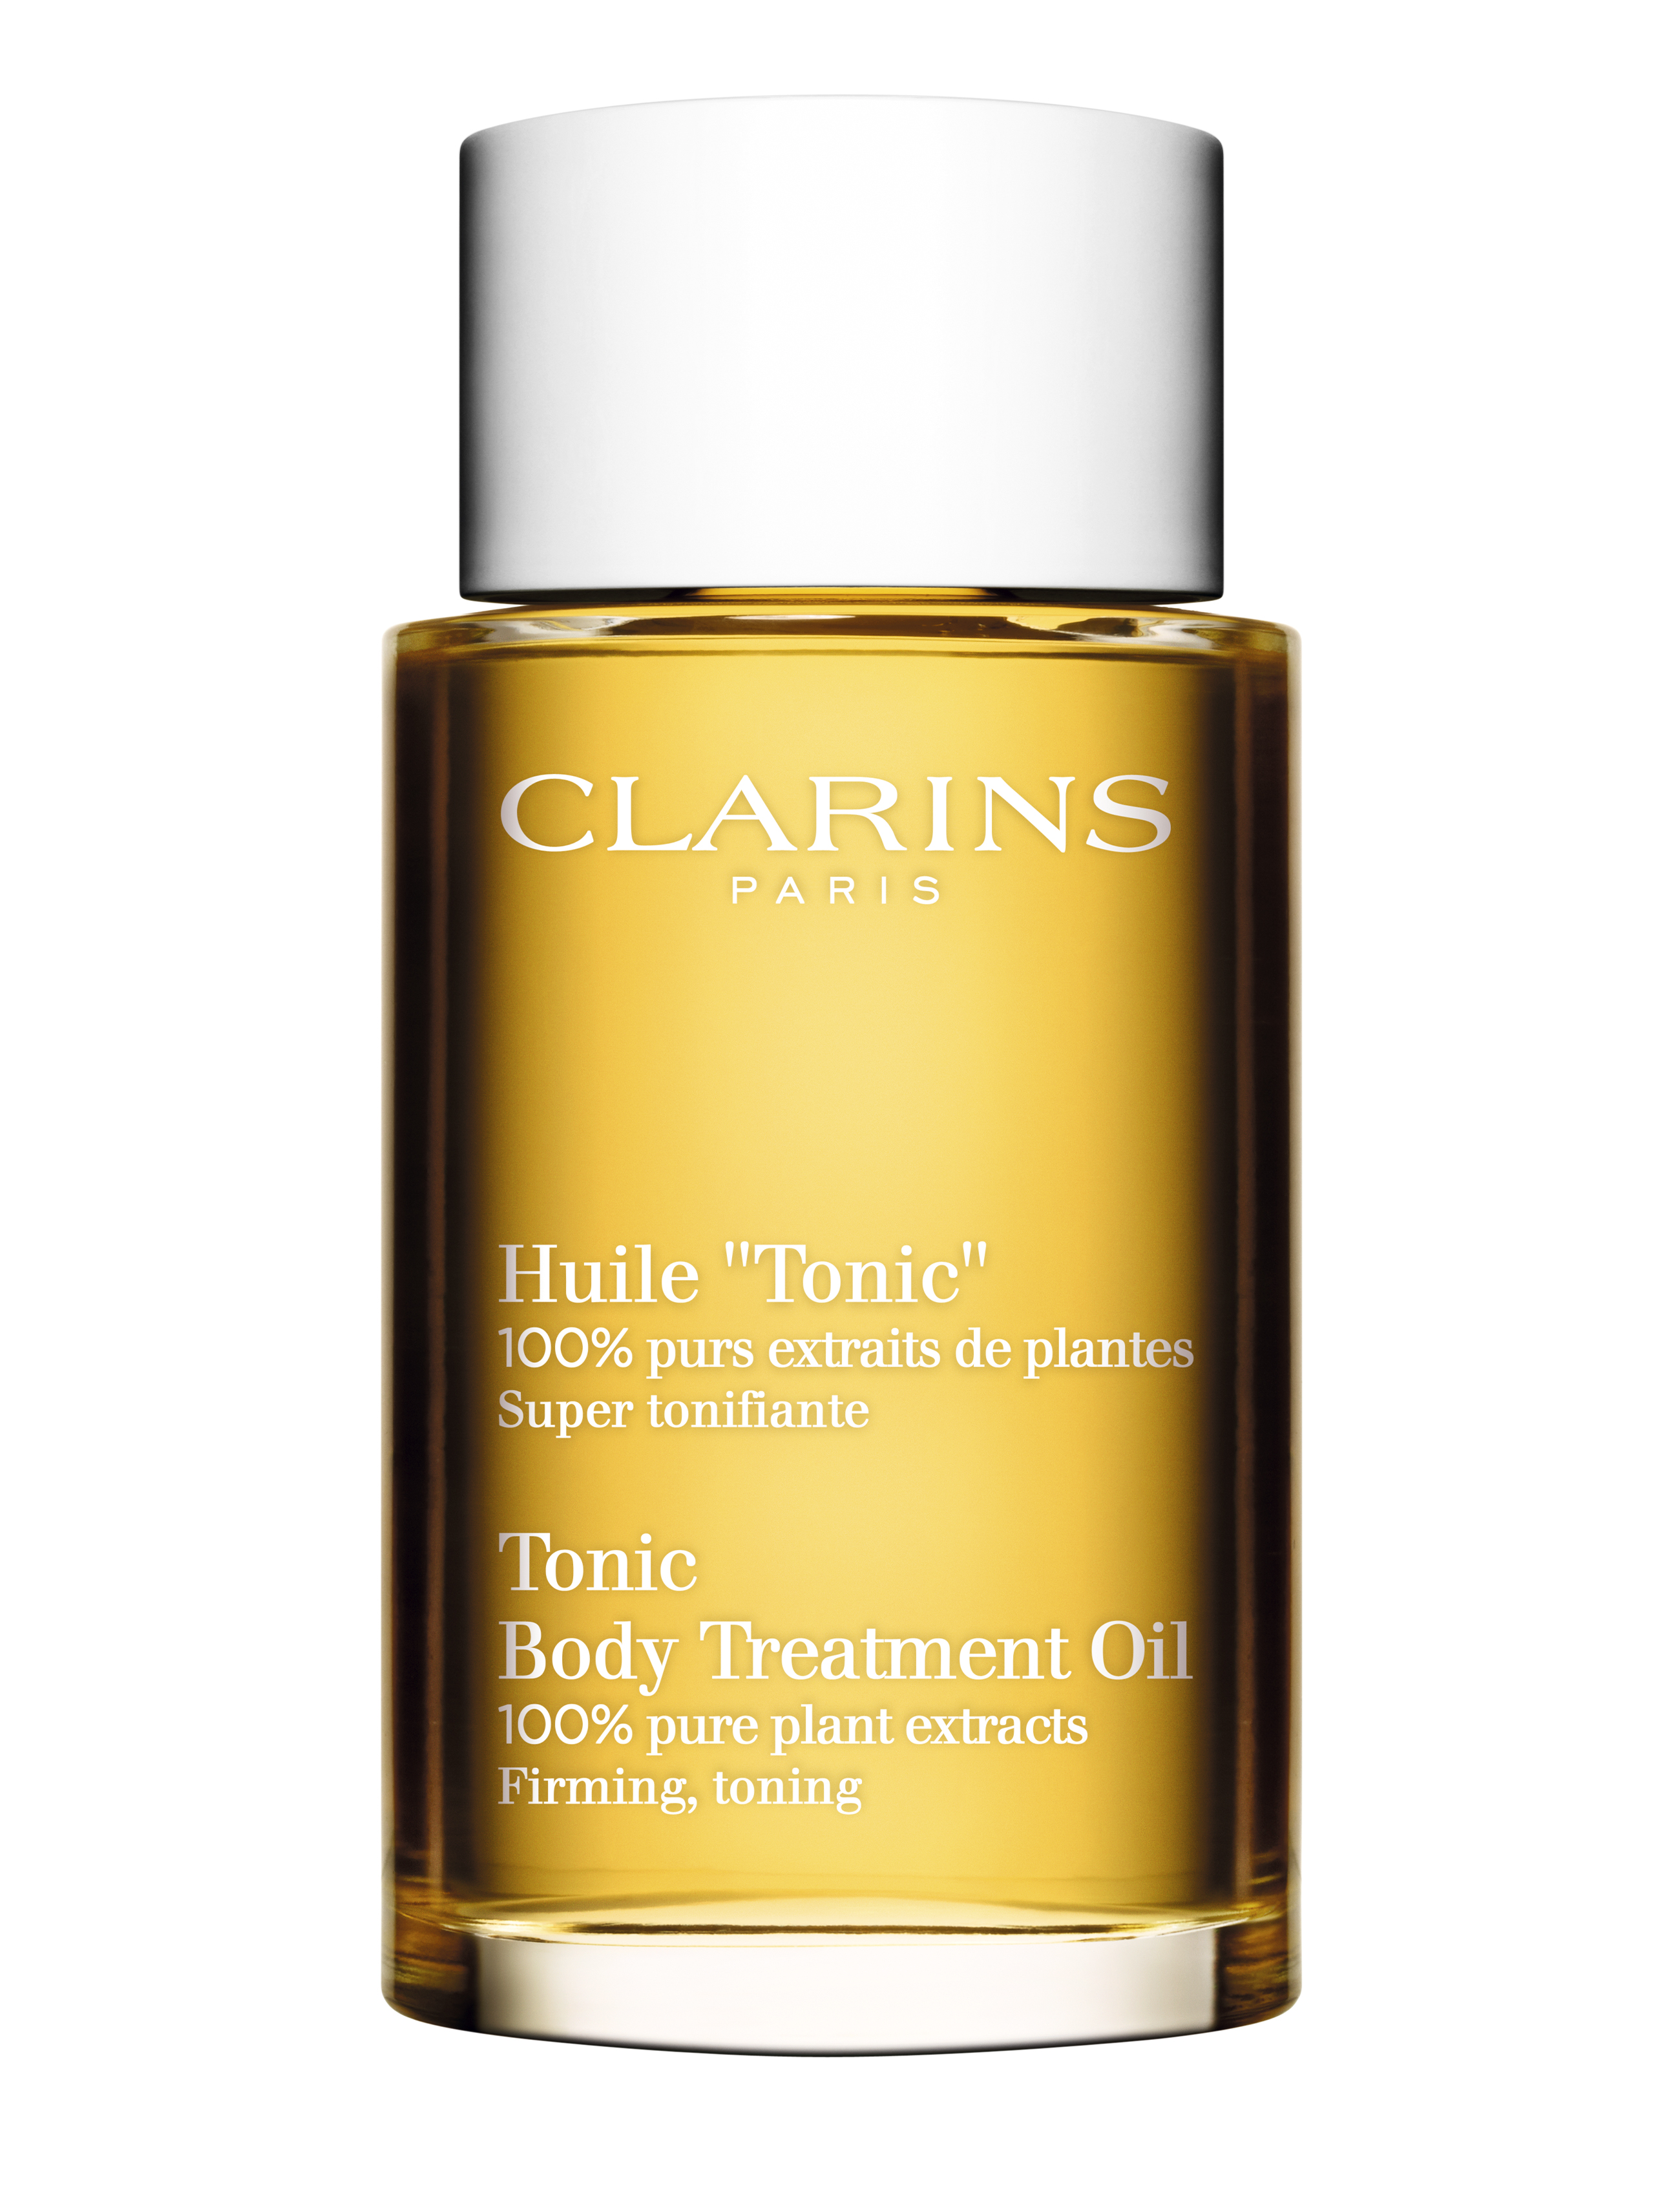  Tonic Body Treatment Oil